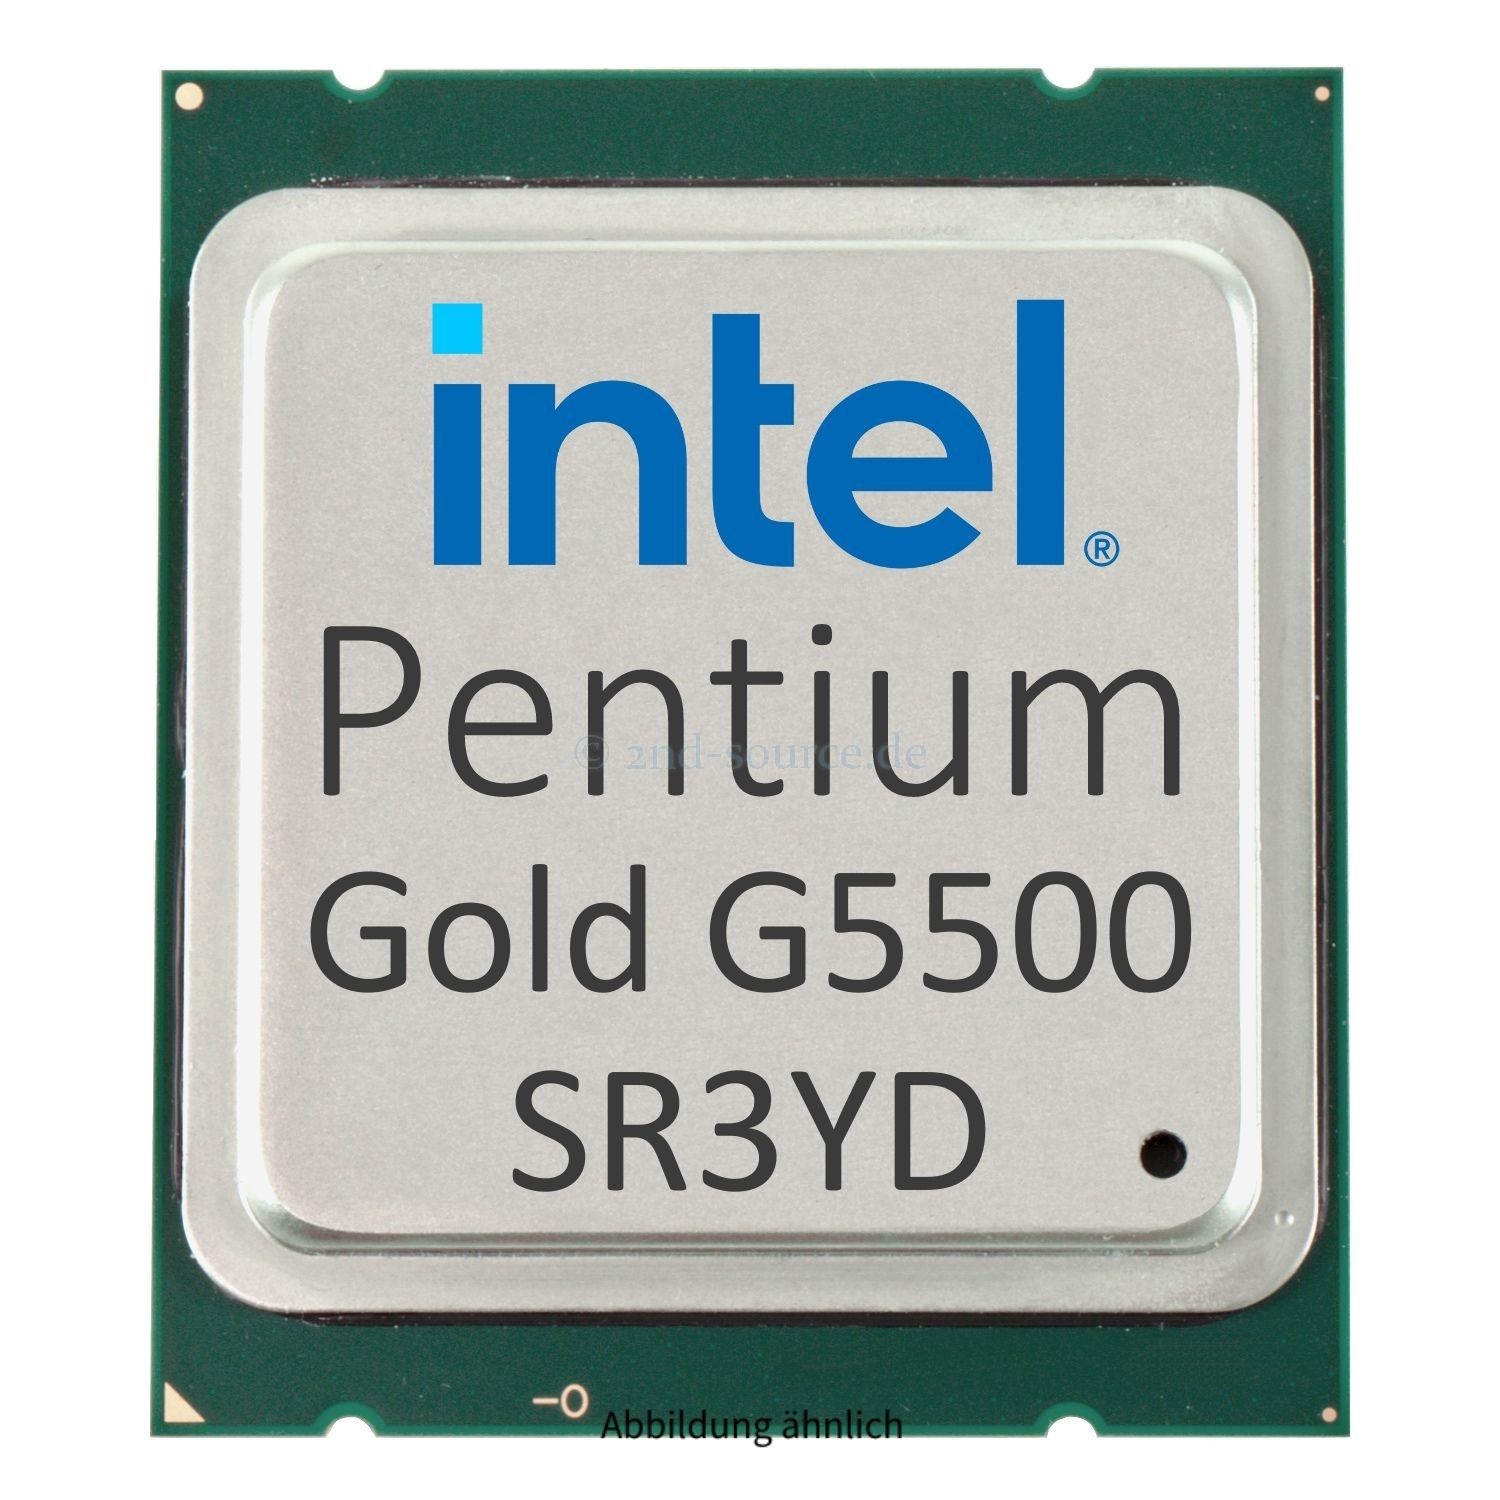 Intel Pentium Gold G5500 3.80GHz 4MB 2-Core CPU 54W SR3YD CM8068403377611